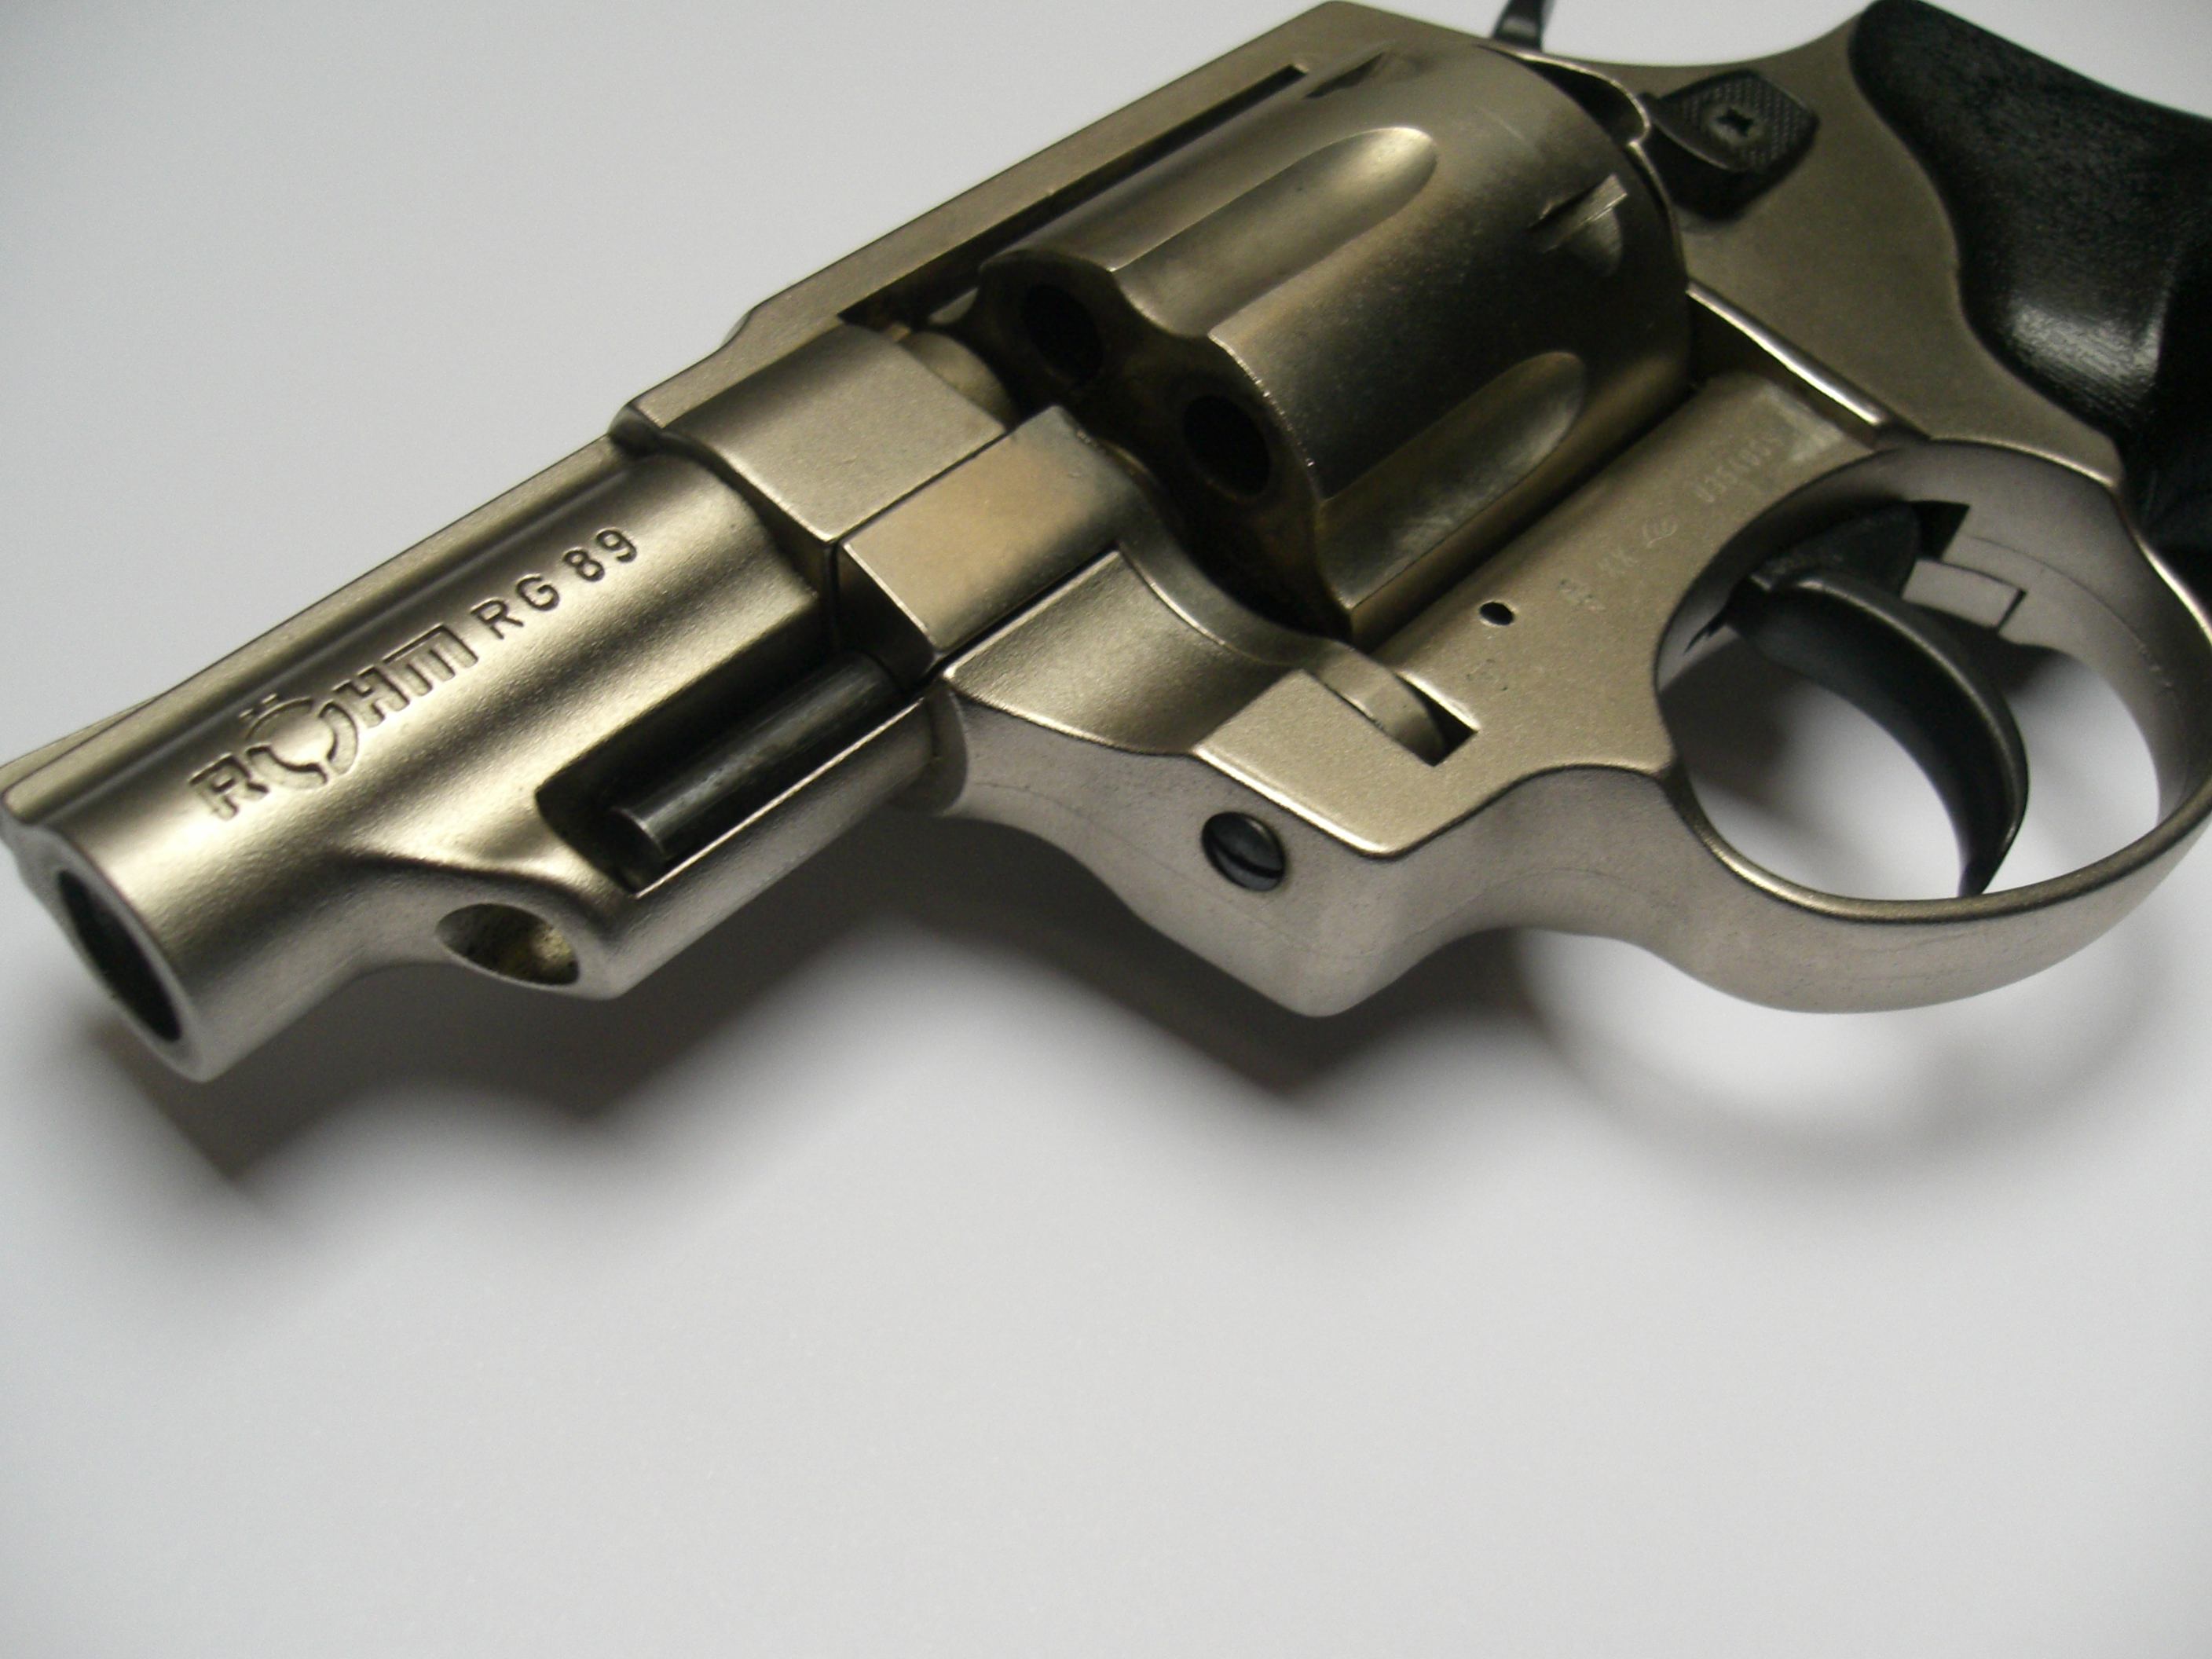 a file photo of a pistol